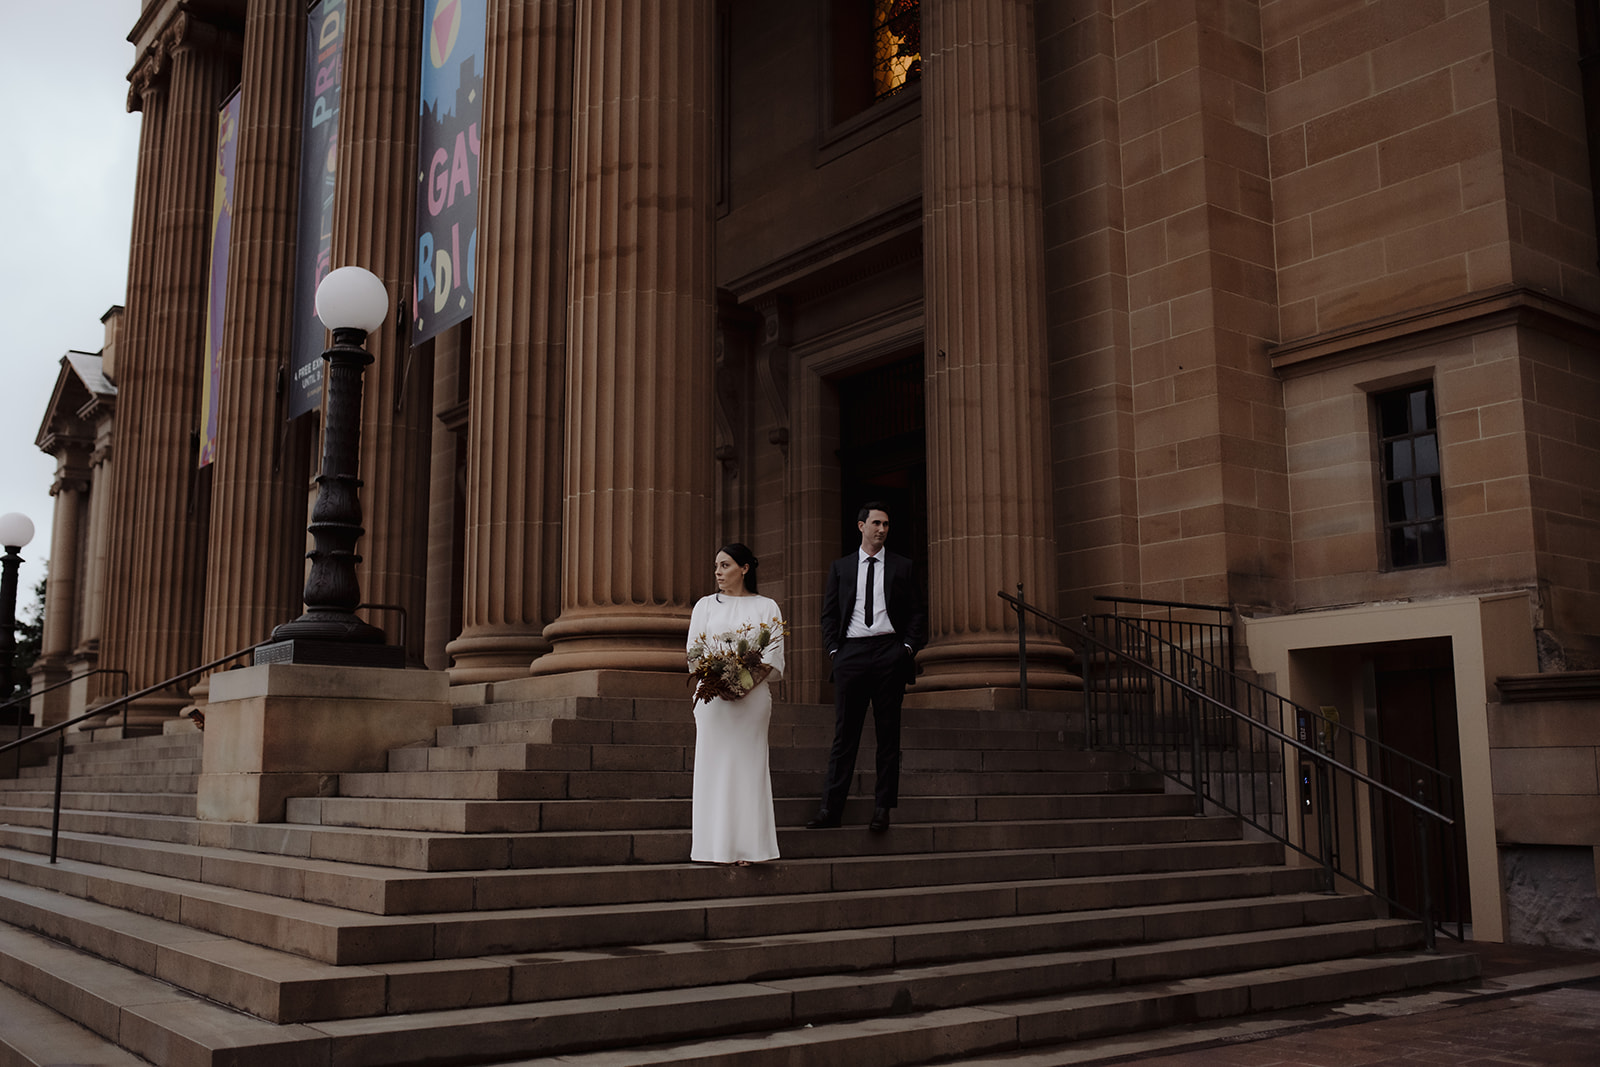 sydney wedding photographed by Jon Gazzignato